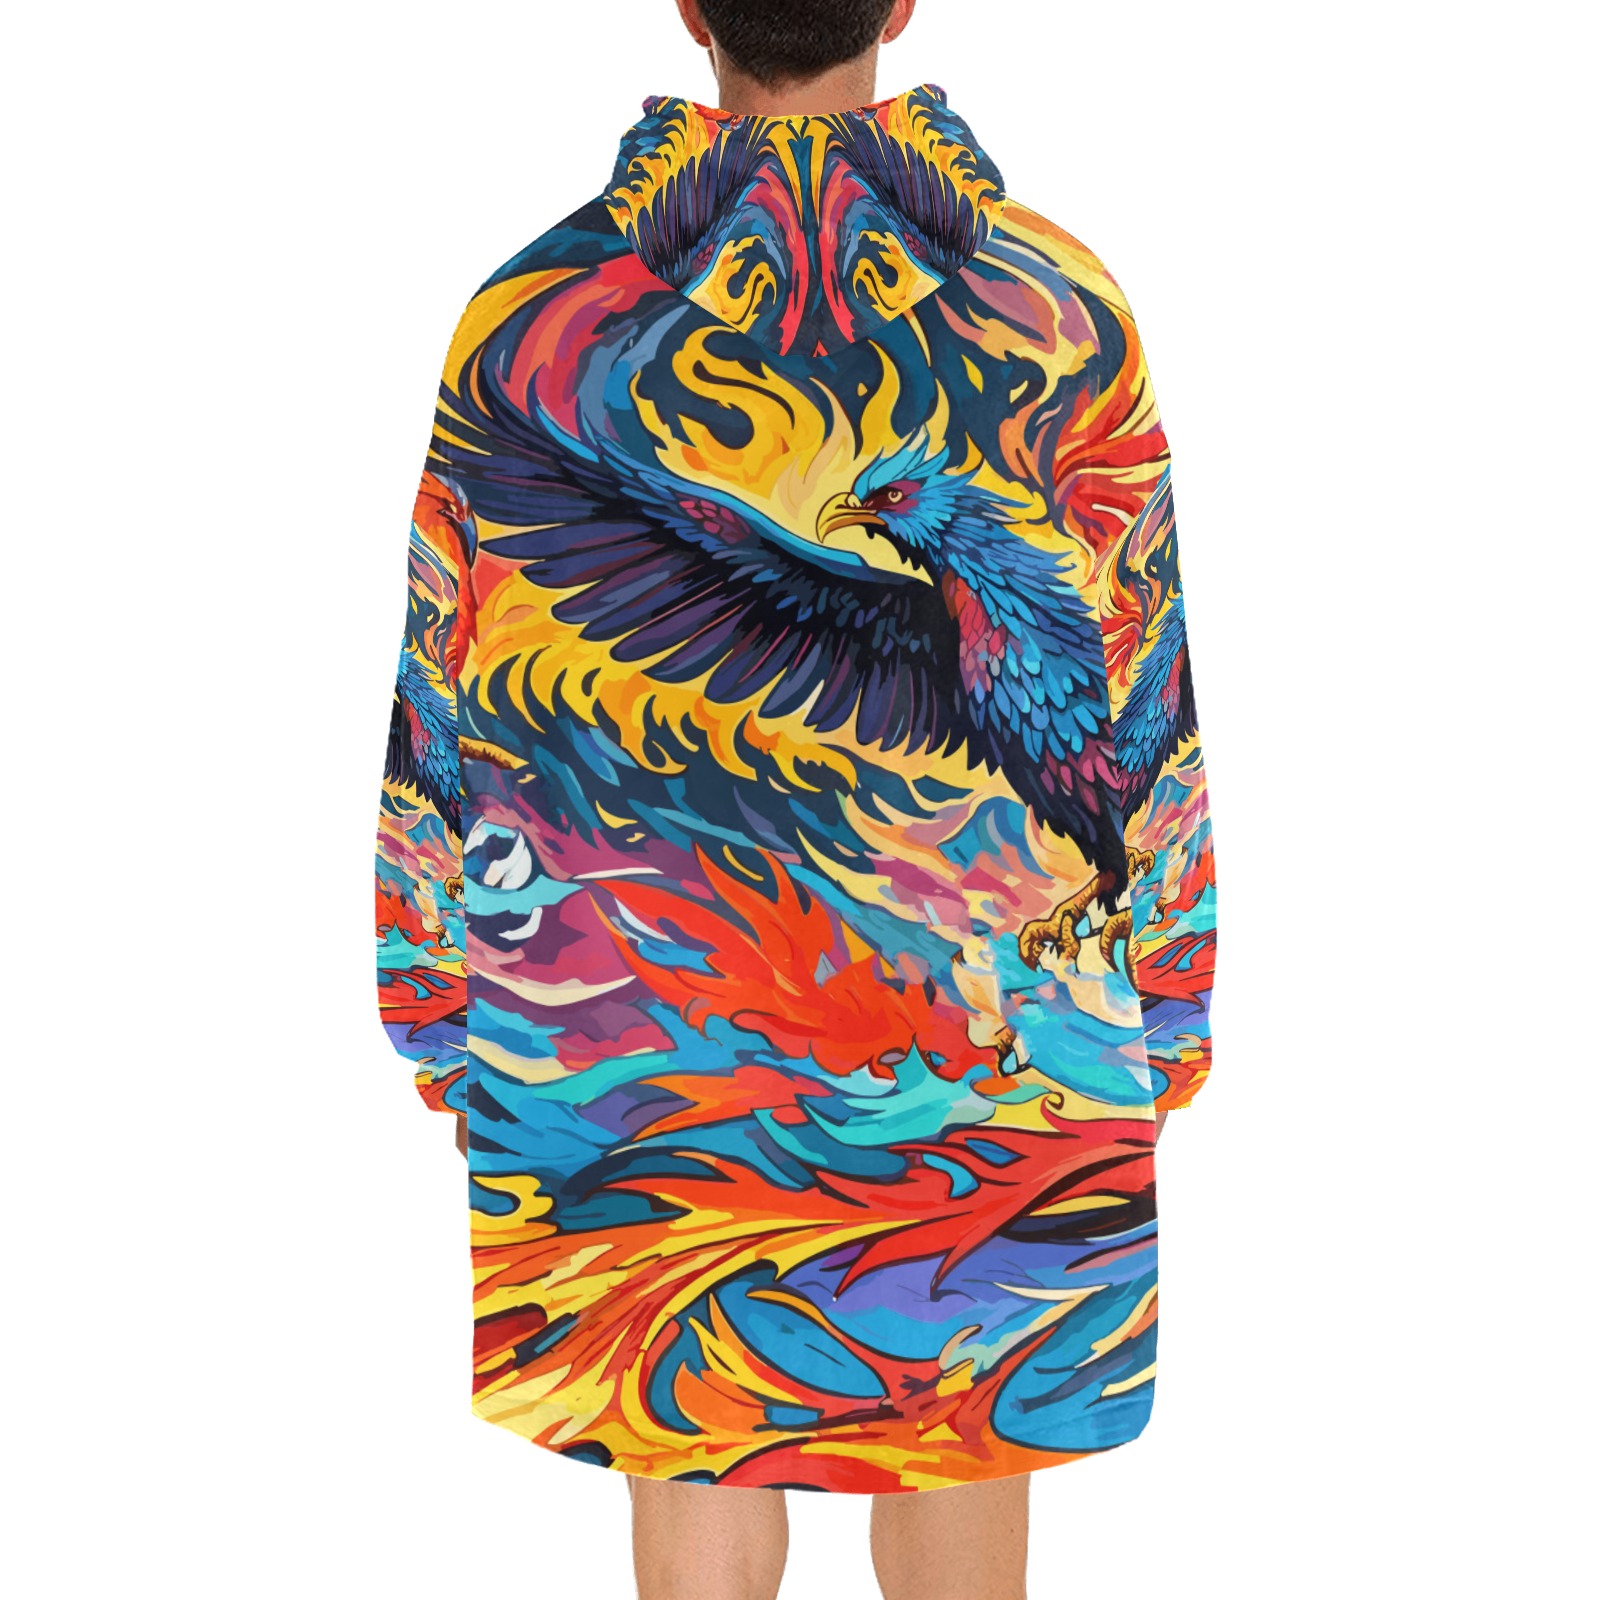 Stylish phoenix birds, fire, flames abstract art. Blanket Hoodie for Men